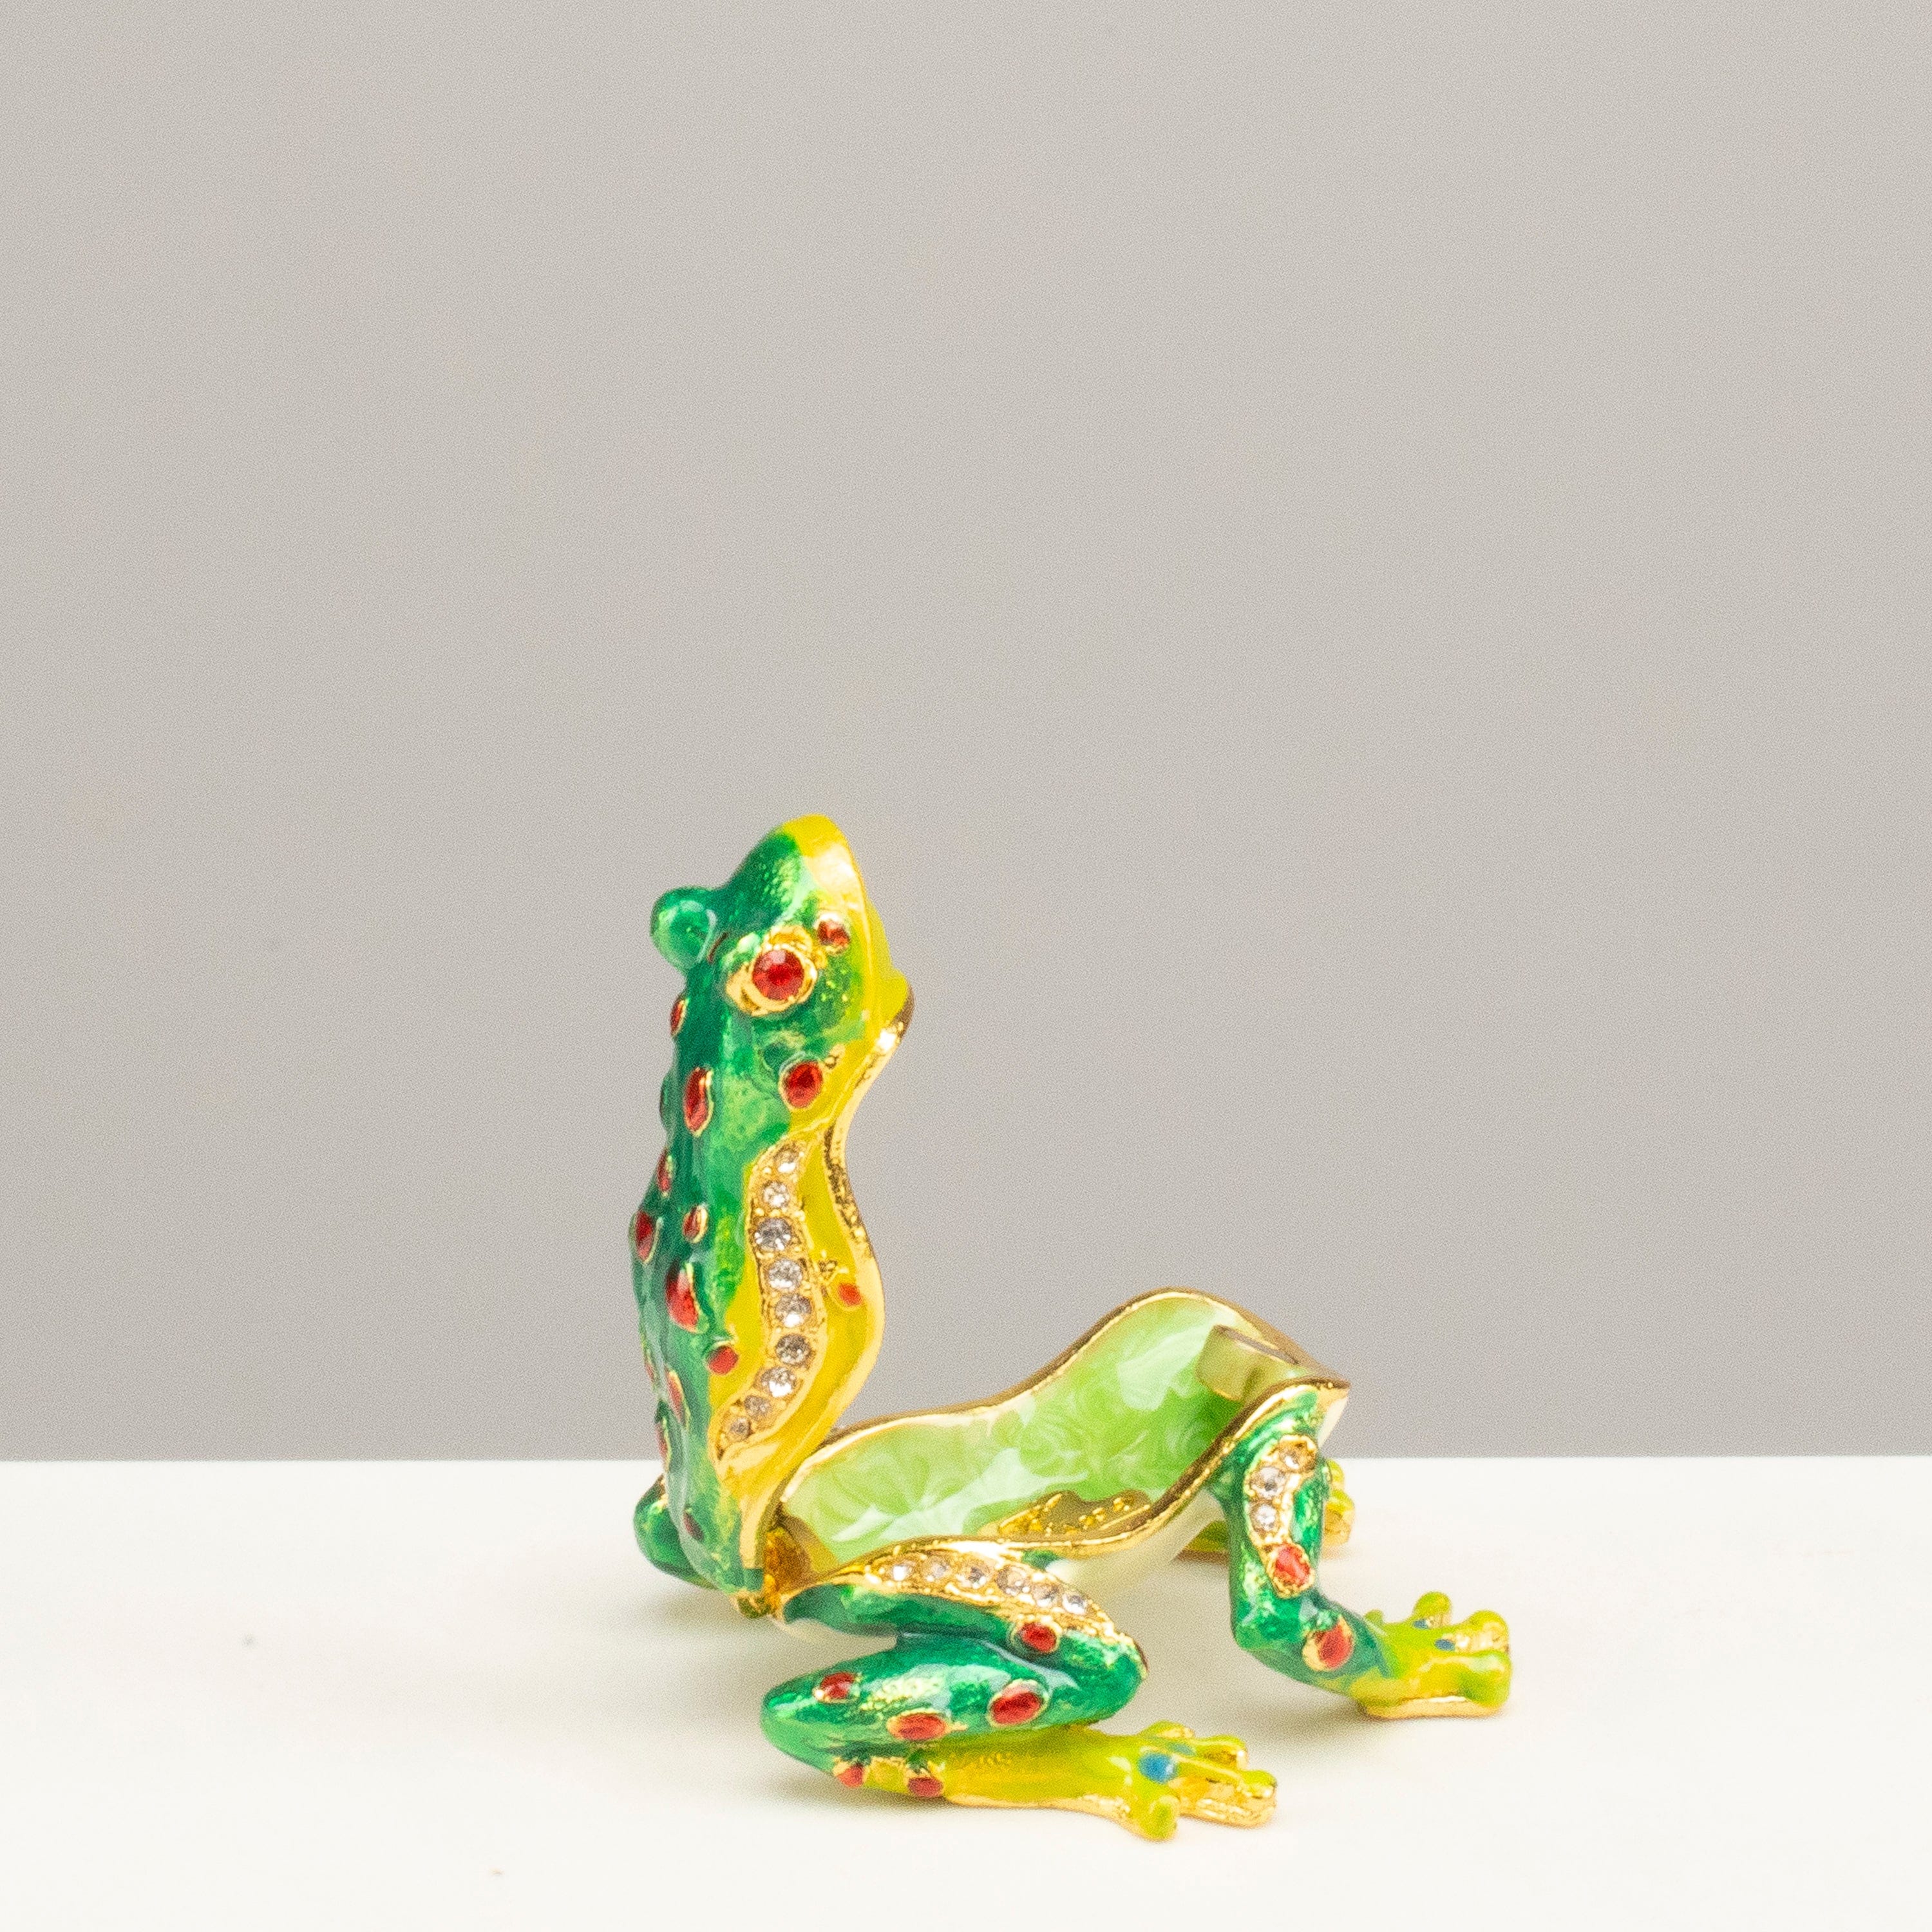 Frog Figurine Keepsake Box made with Crystals